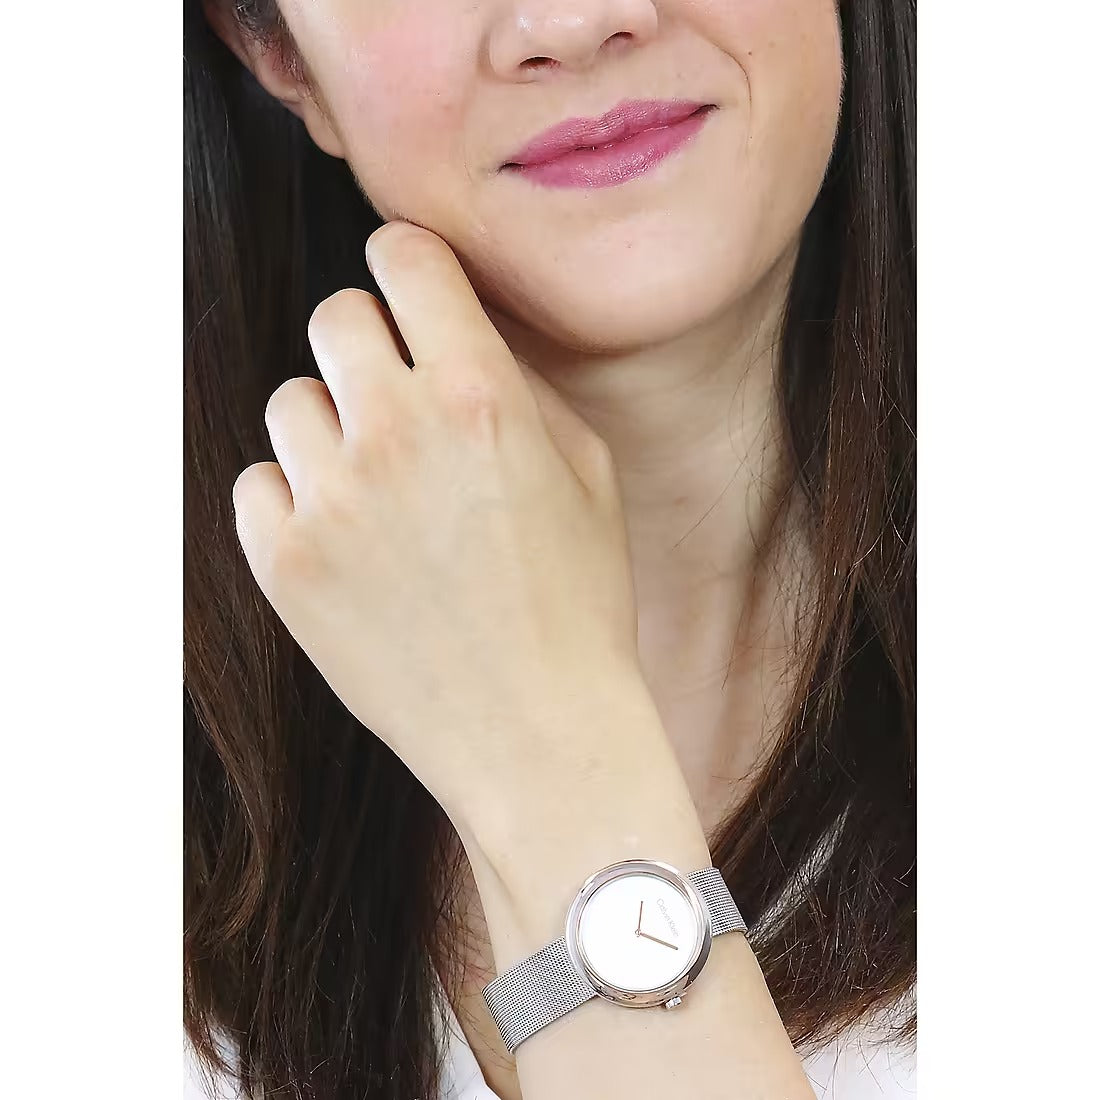 Calvin Klein women's Sculptural quartz watch, 34mm - 25200011